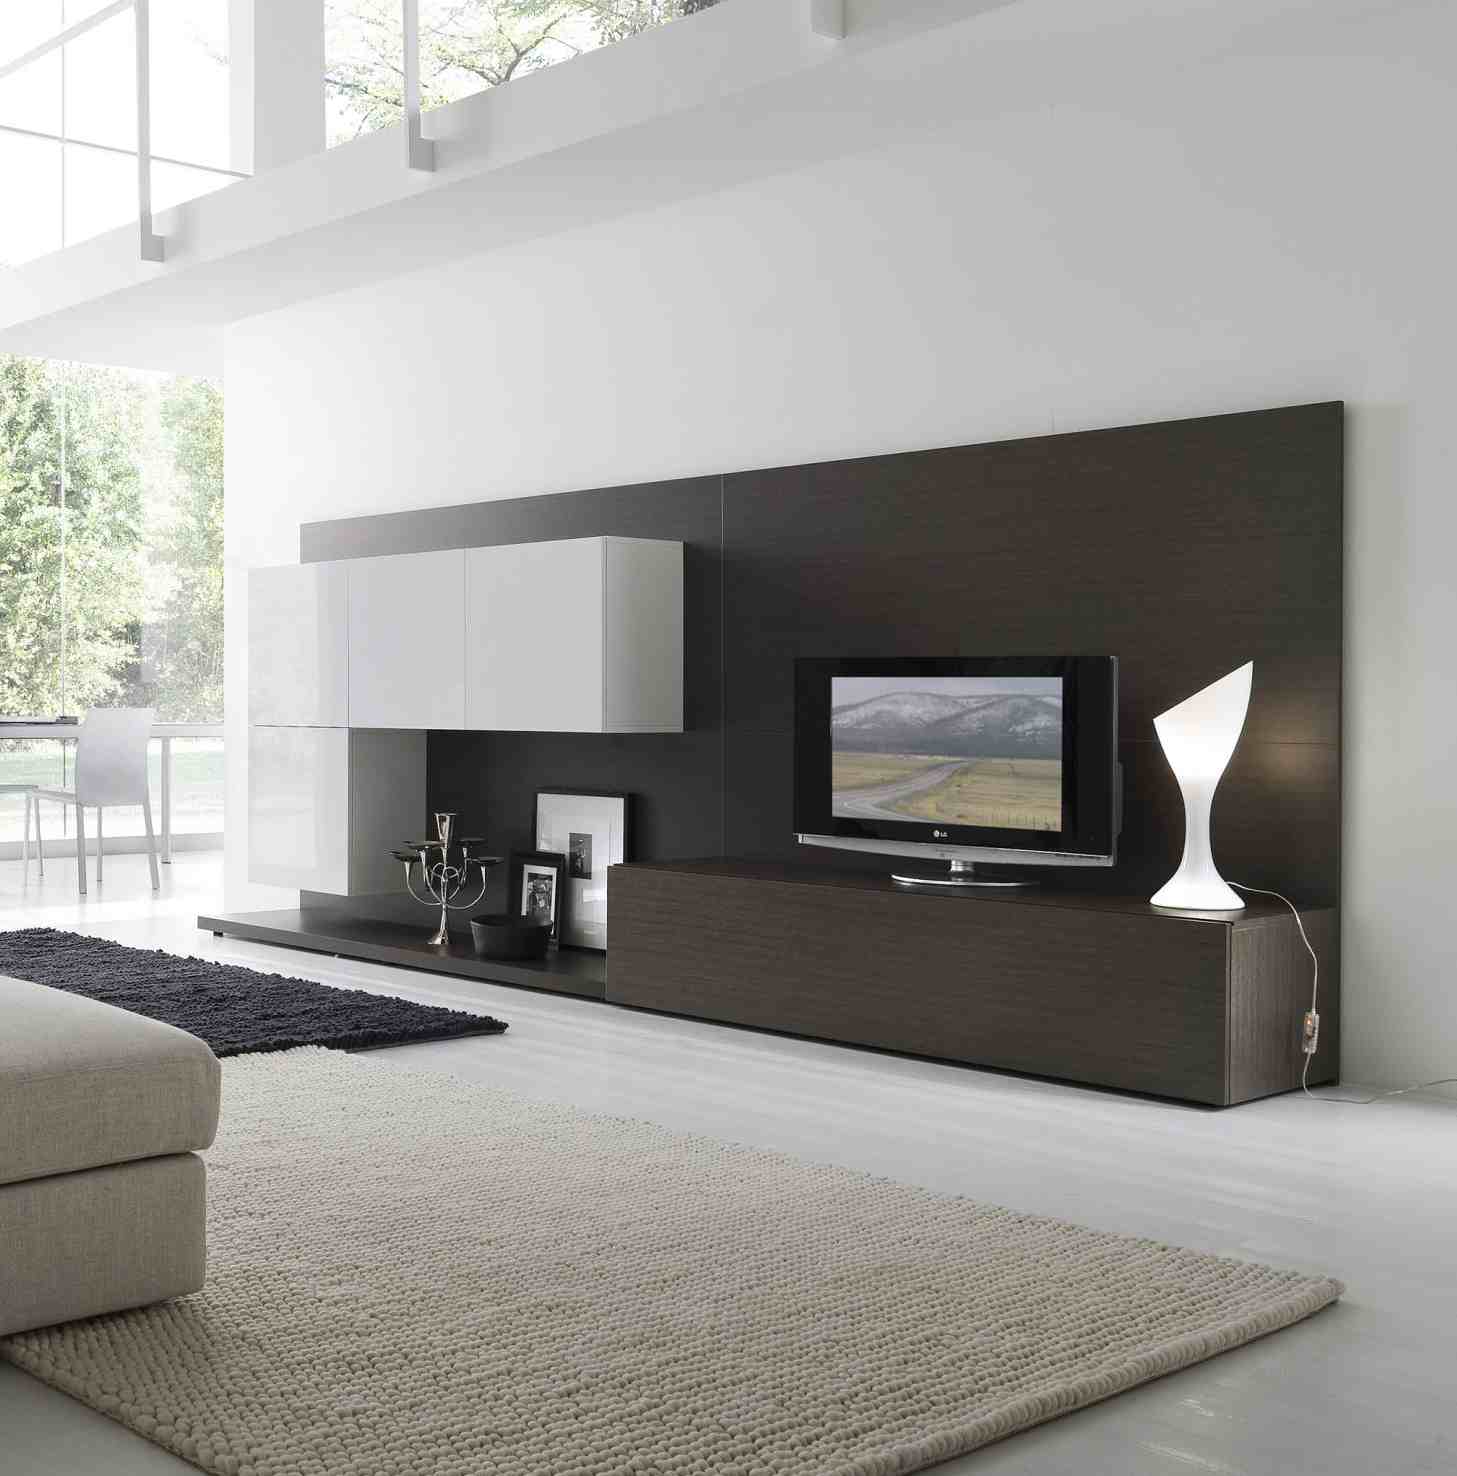 Minimalistic-Living-Room-Interior-design-and-furnishings1